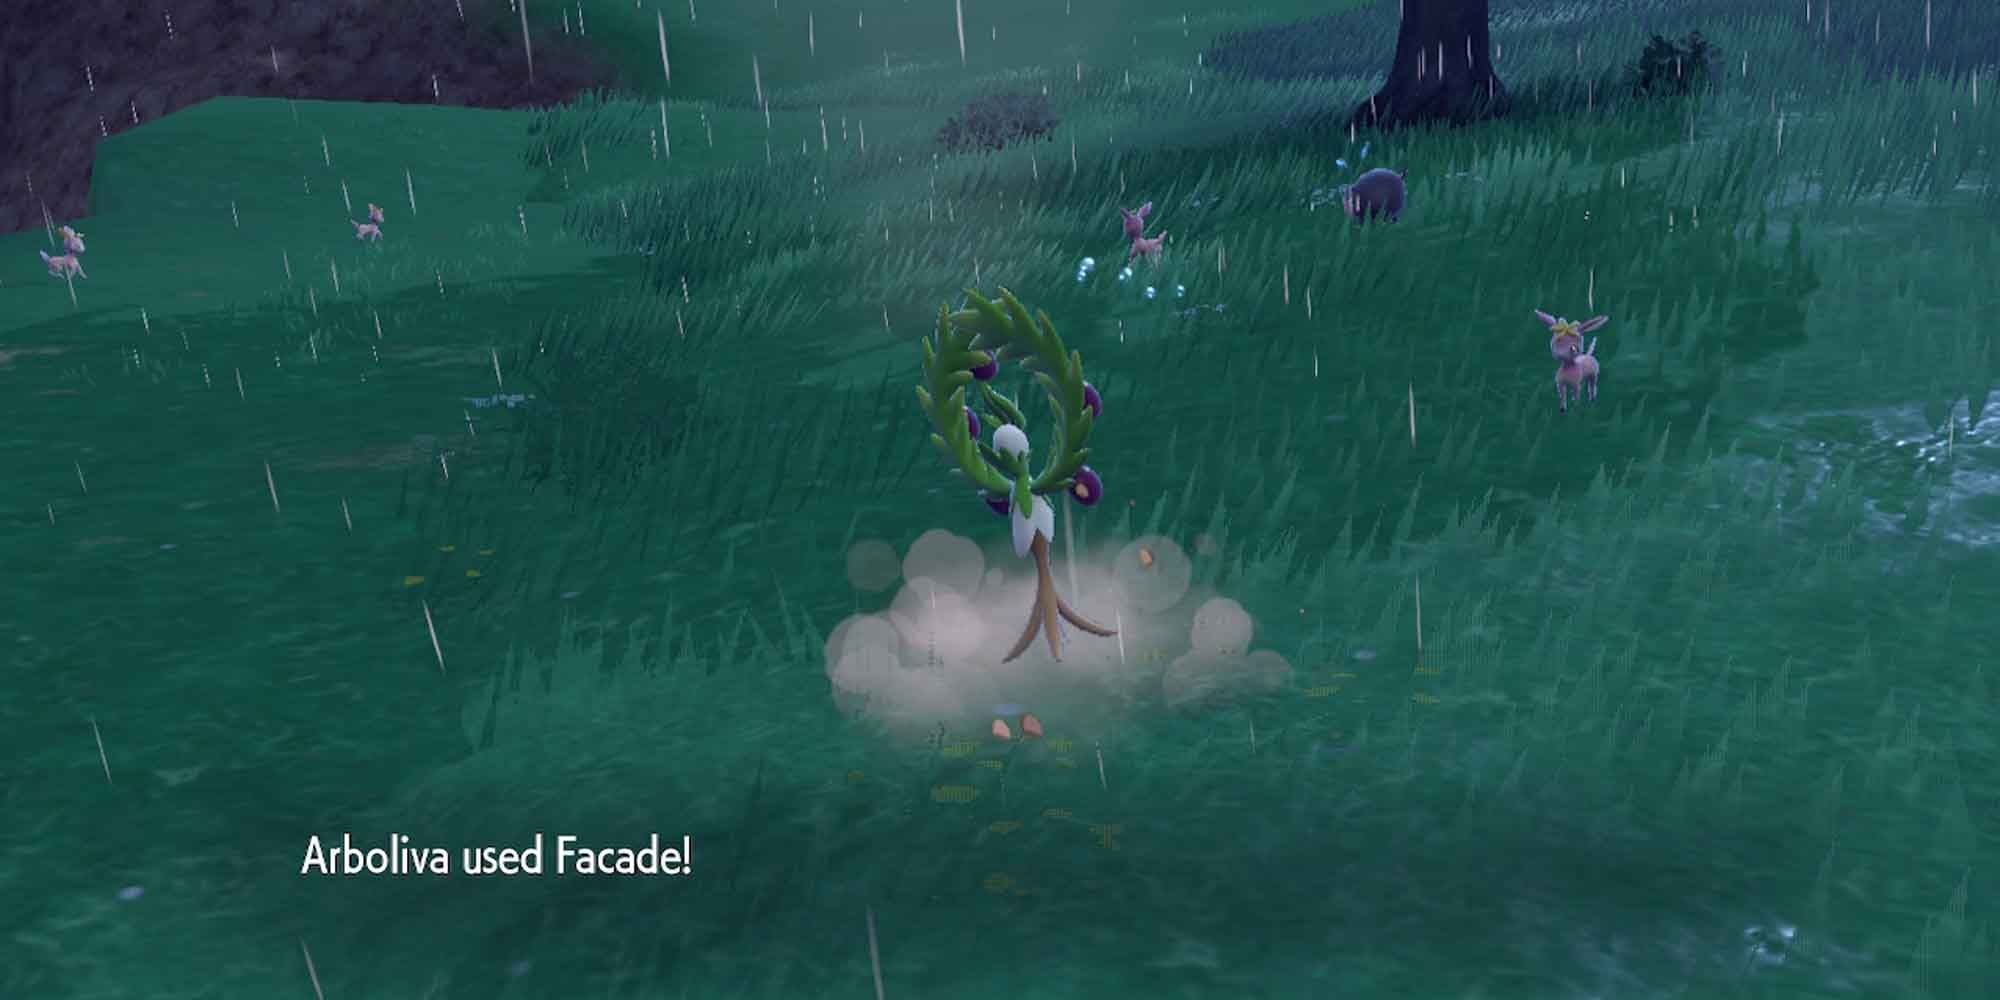 The Facade move in Pokemon Sword and Shield